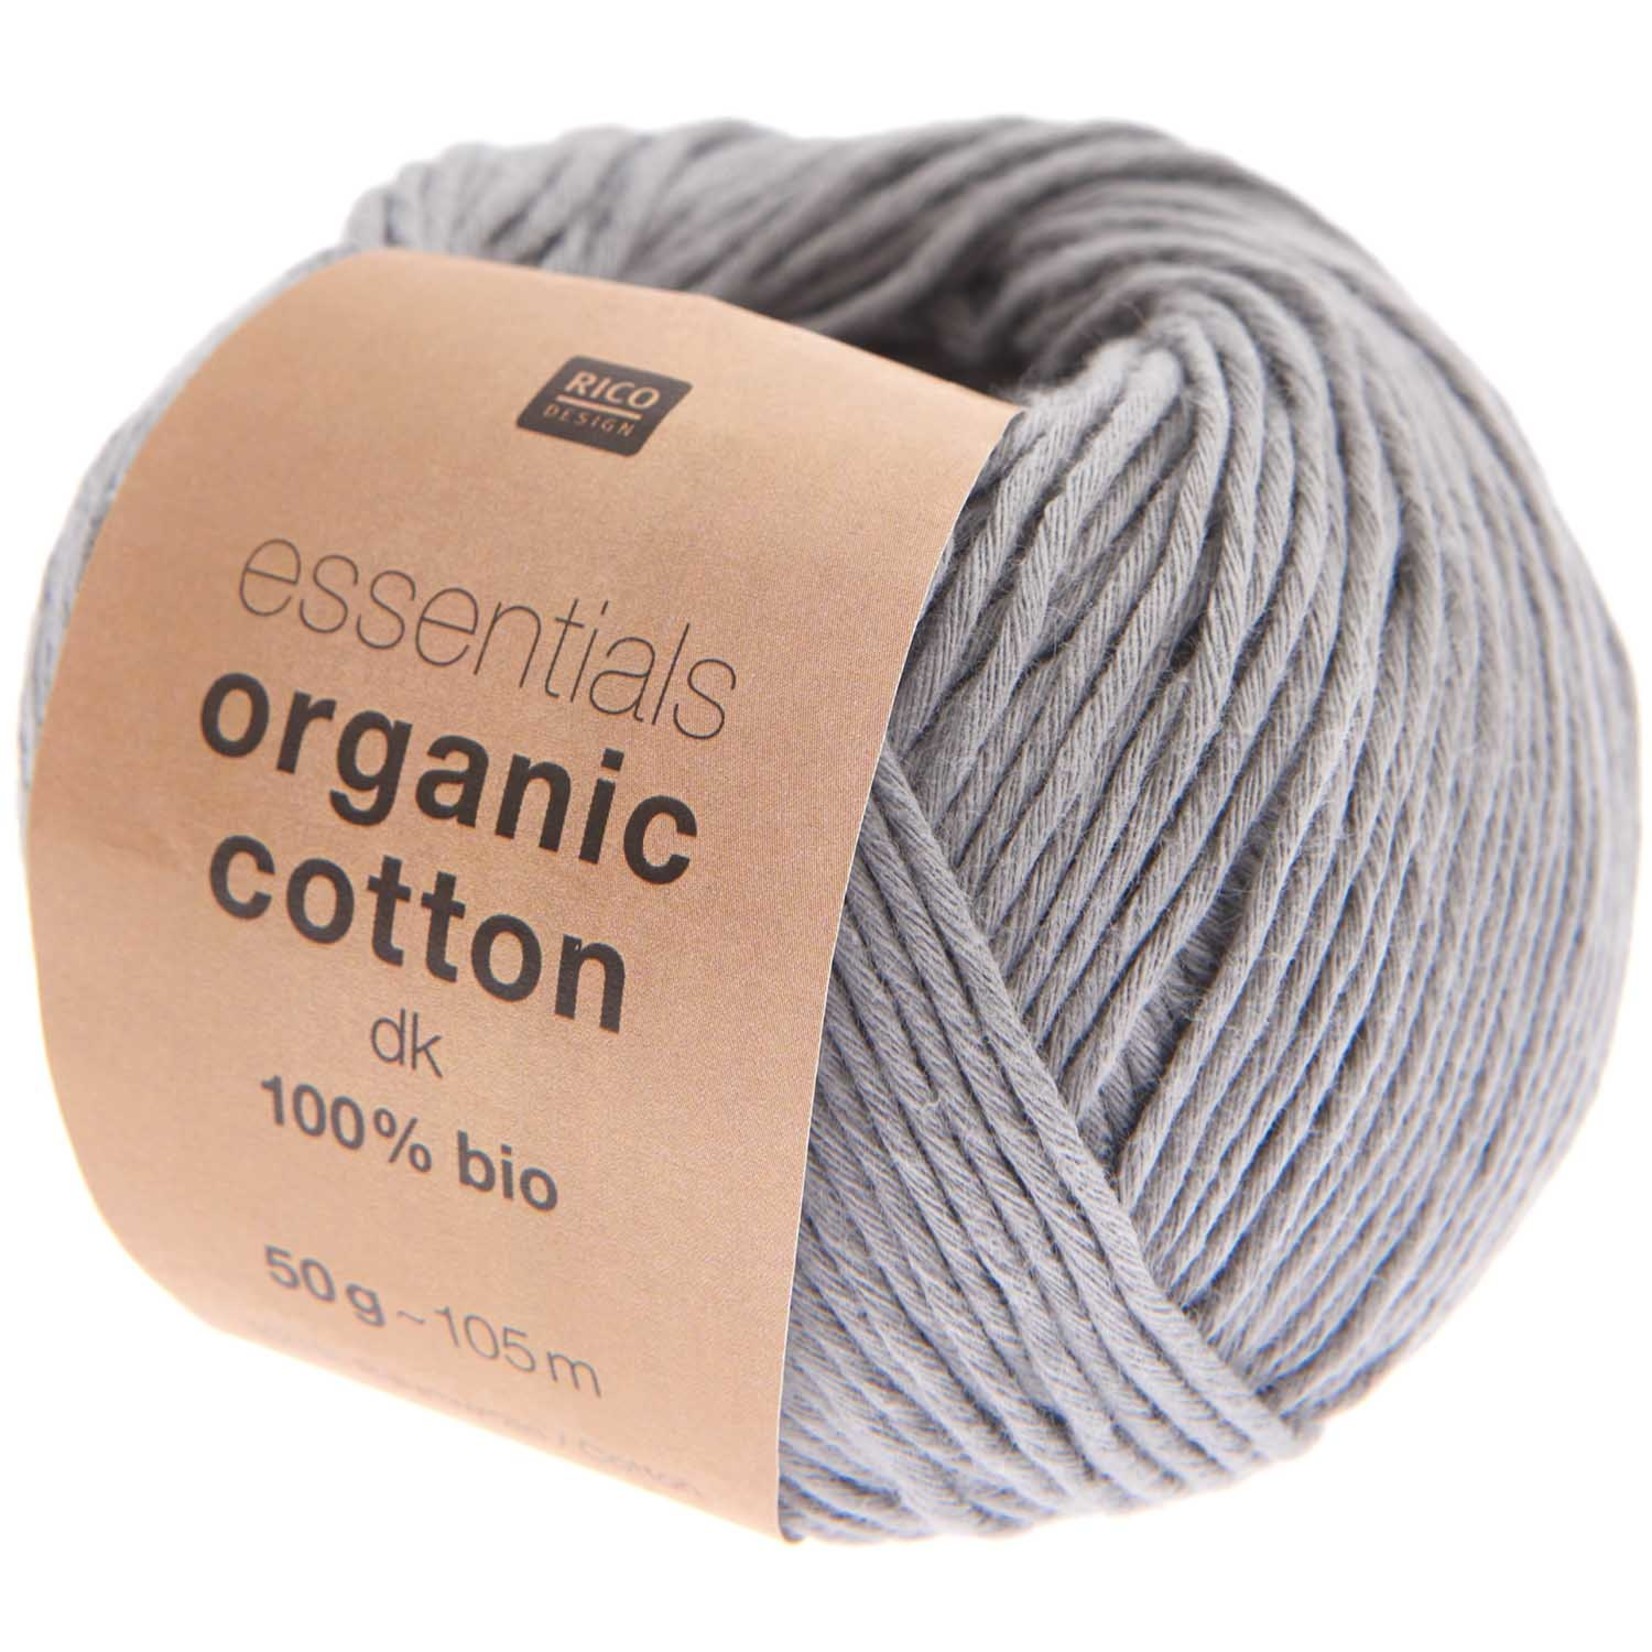 Rico Organic Cotton dk 19 Grey